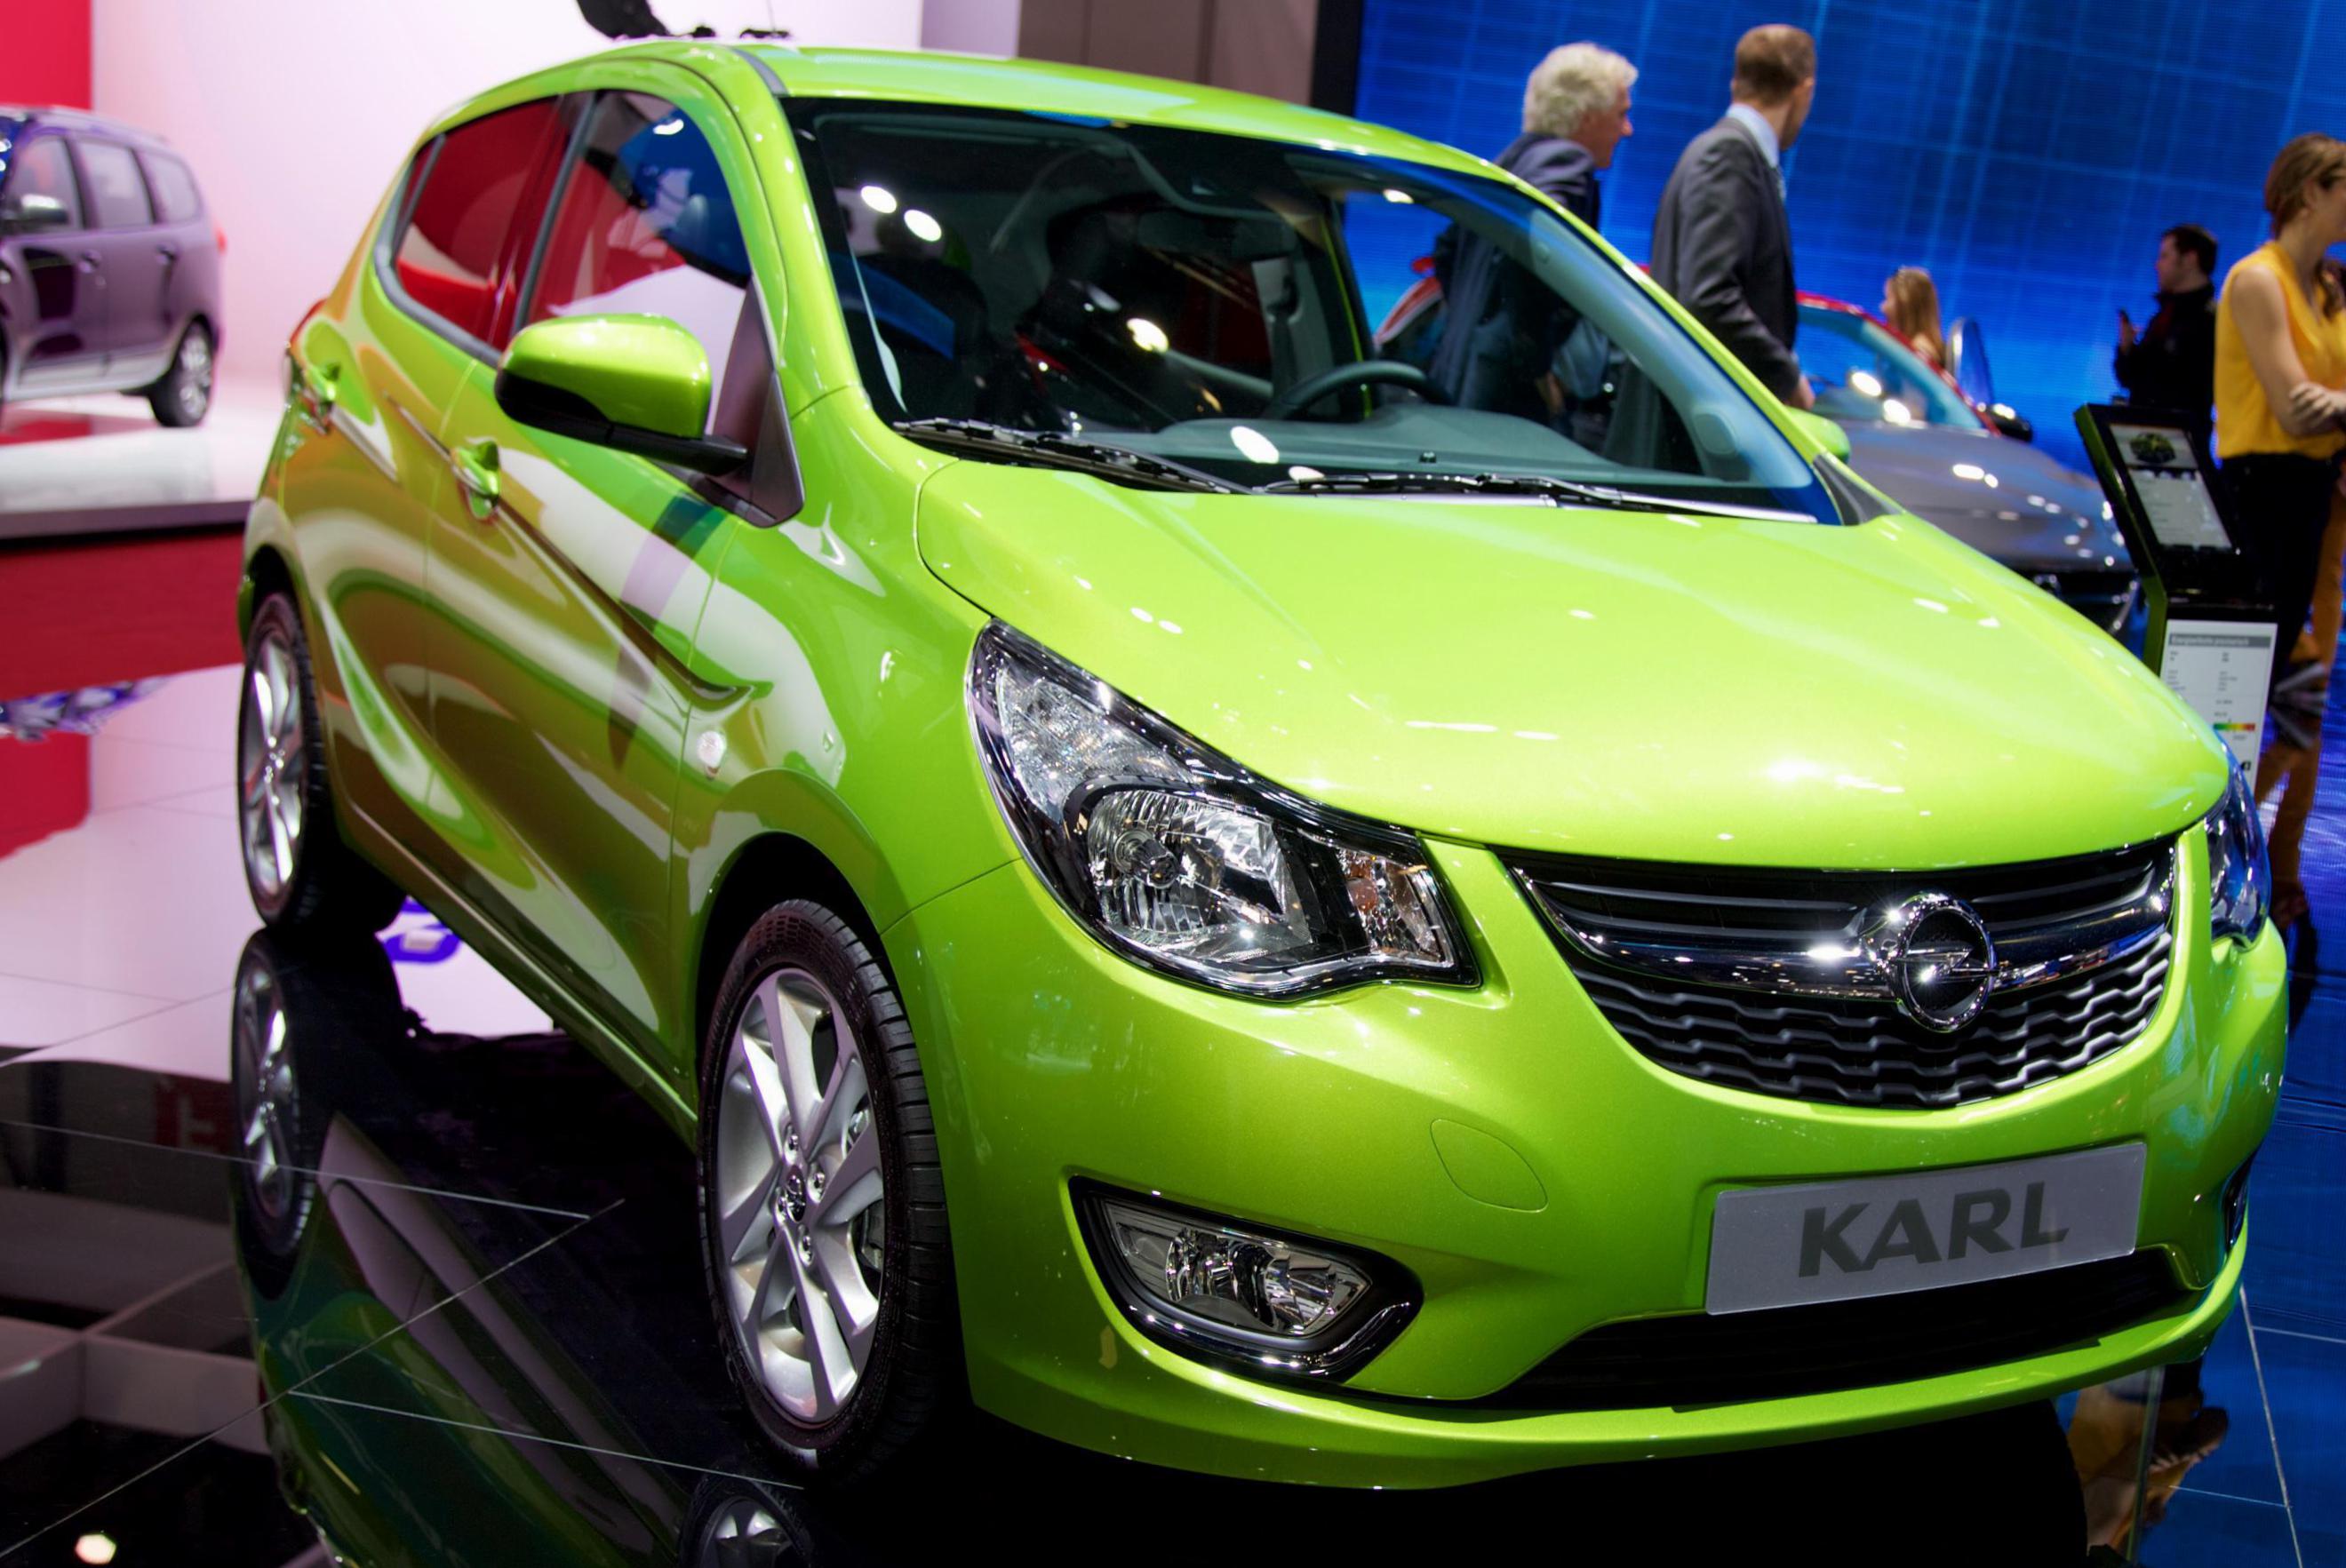 Opel KARL review 2012